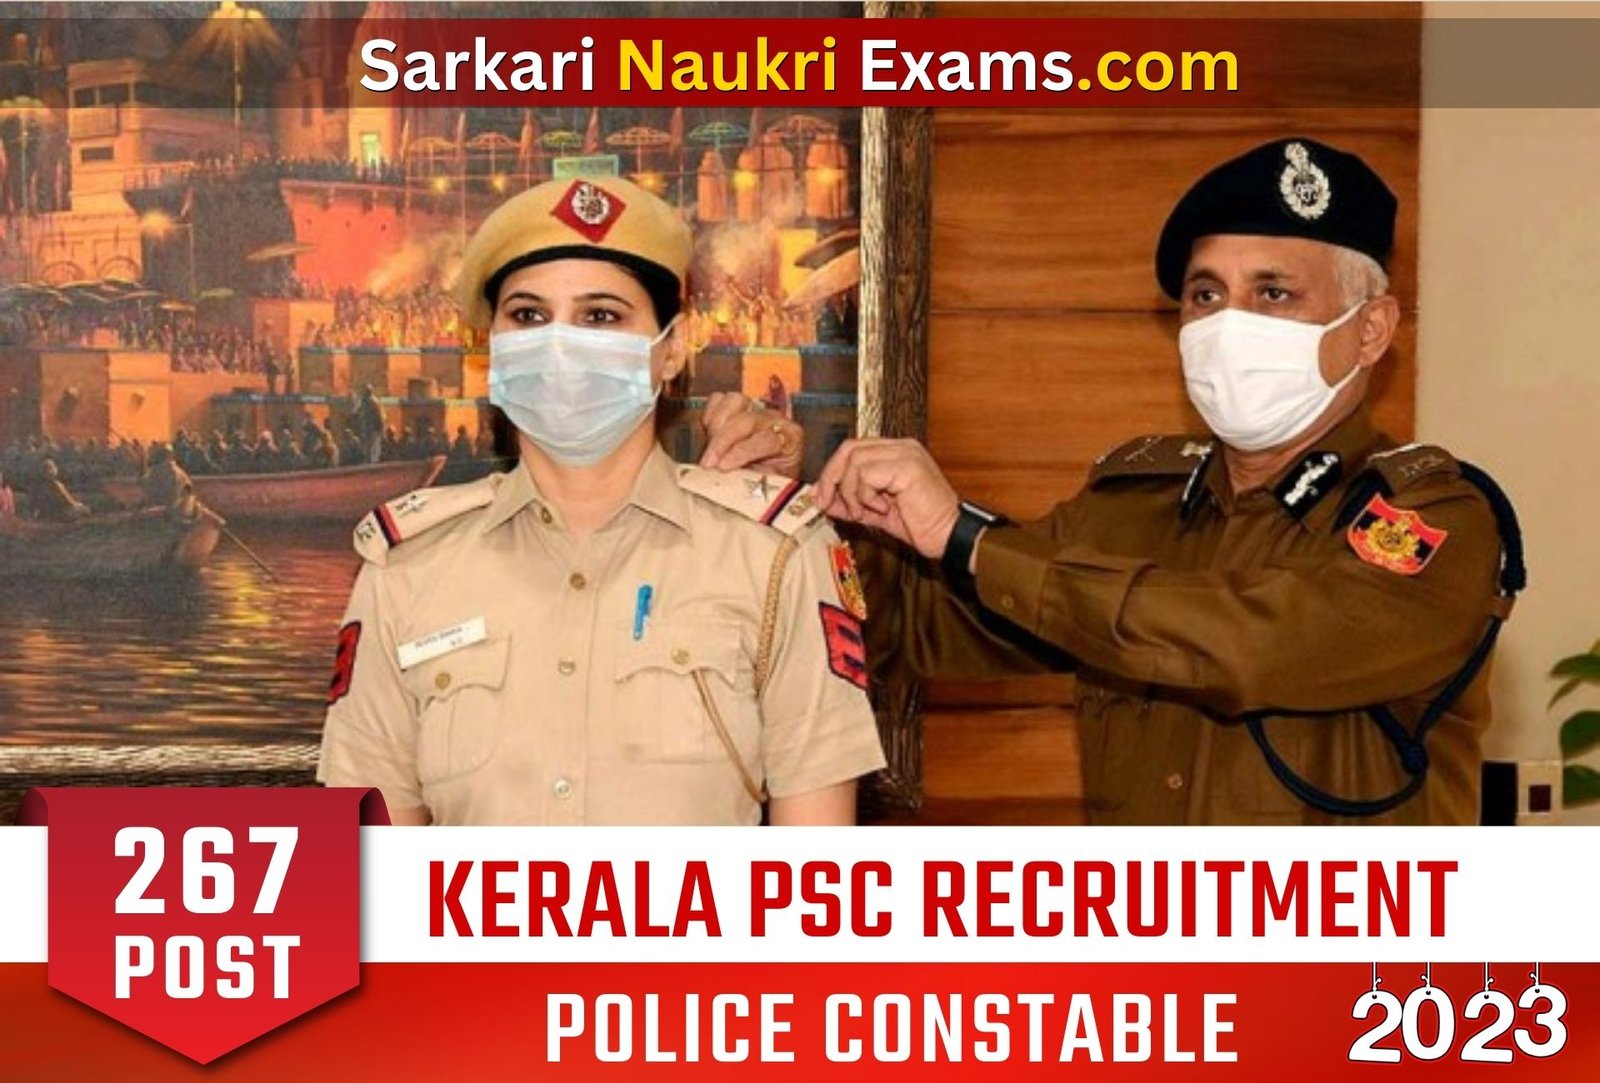 Kerala PSC Police Constable Recruitment 2023 | 267 Post Vacancy Apply Online